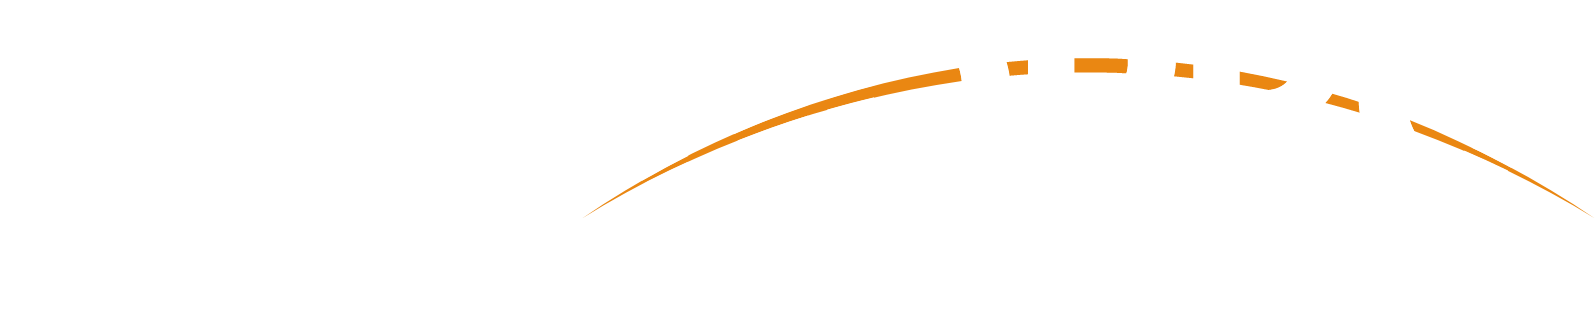 TechnoPro Holdings Logo groß für dunkle Hintergründe (transparentes PNG)